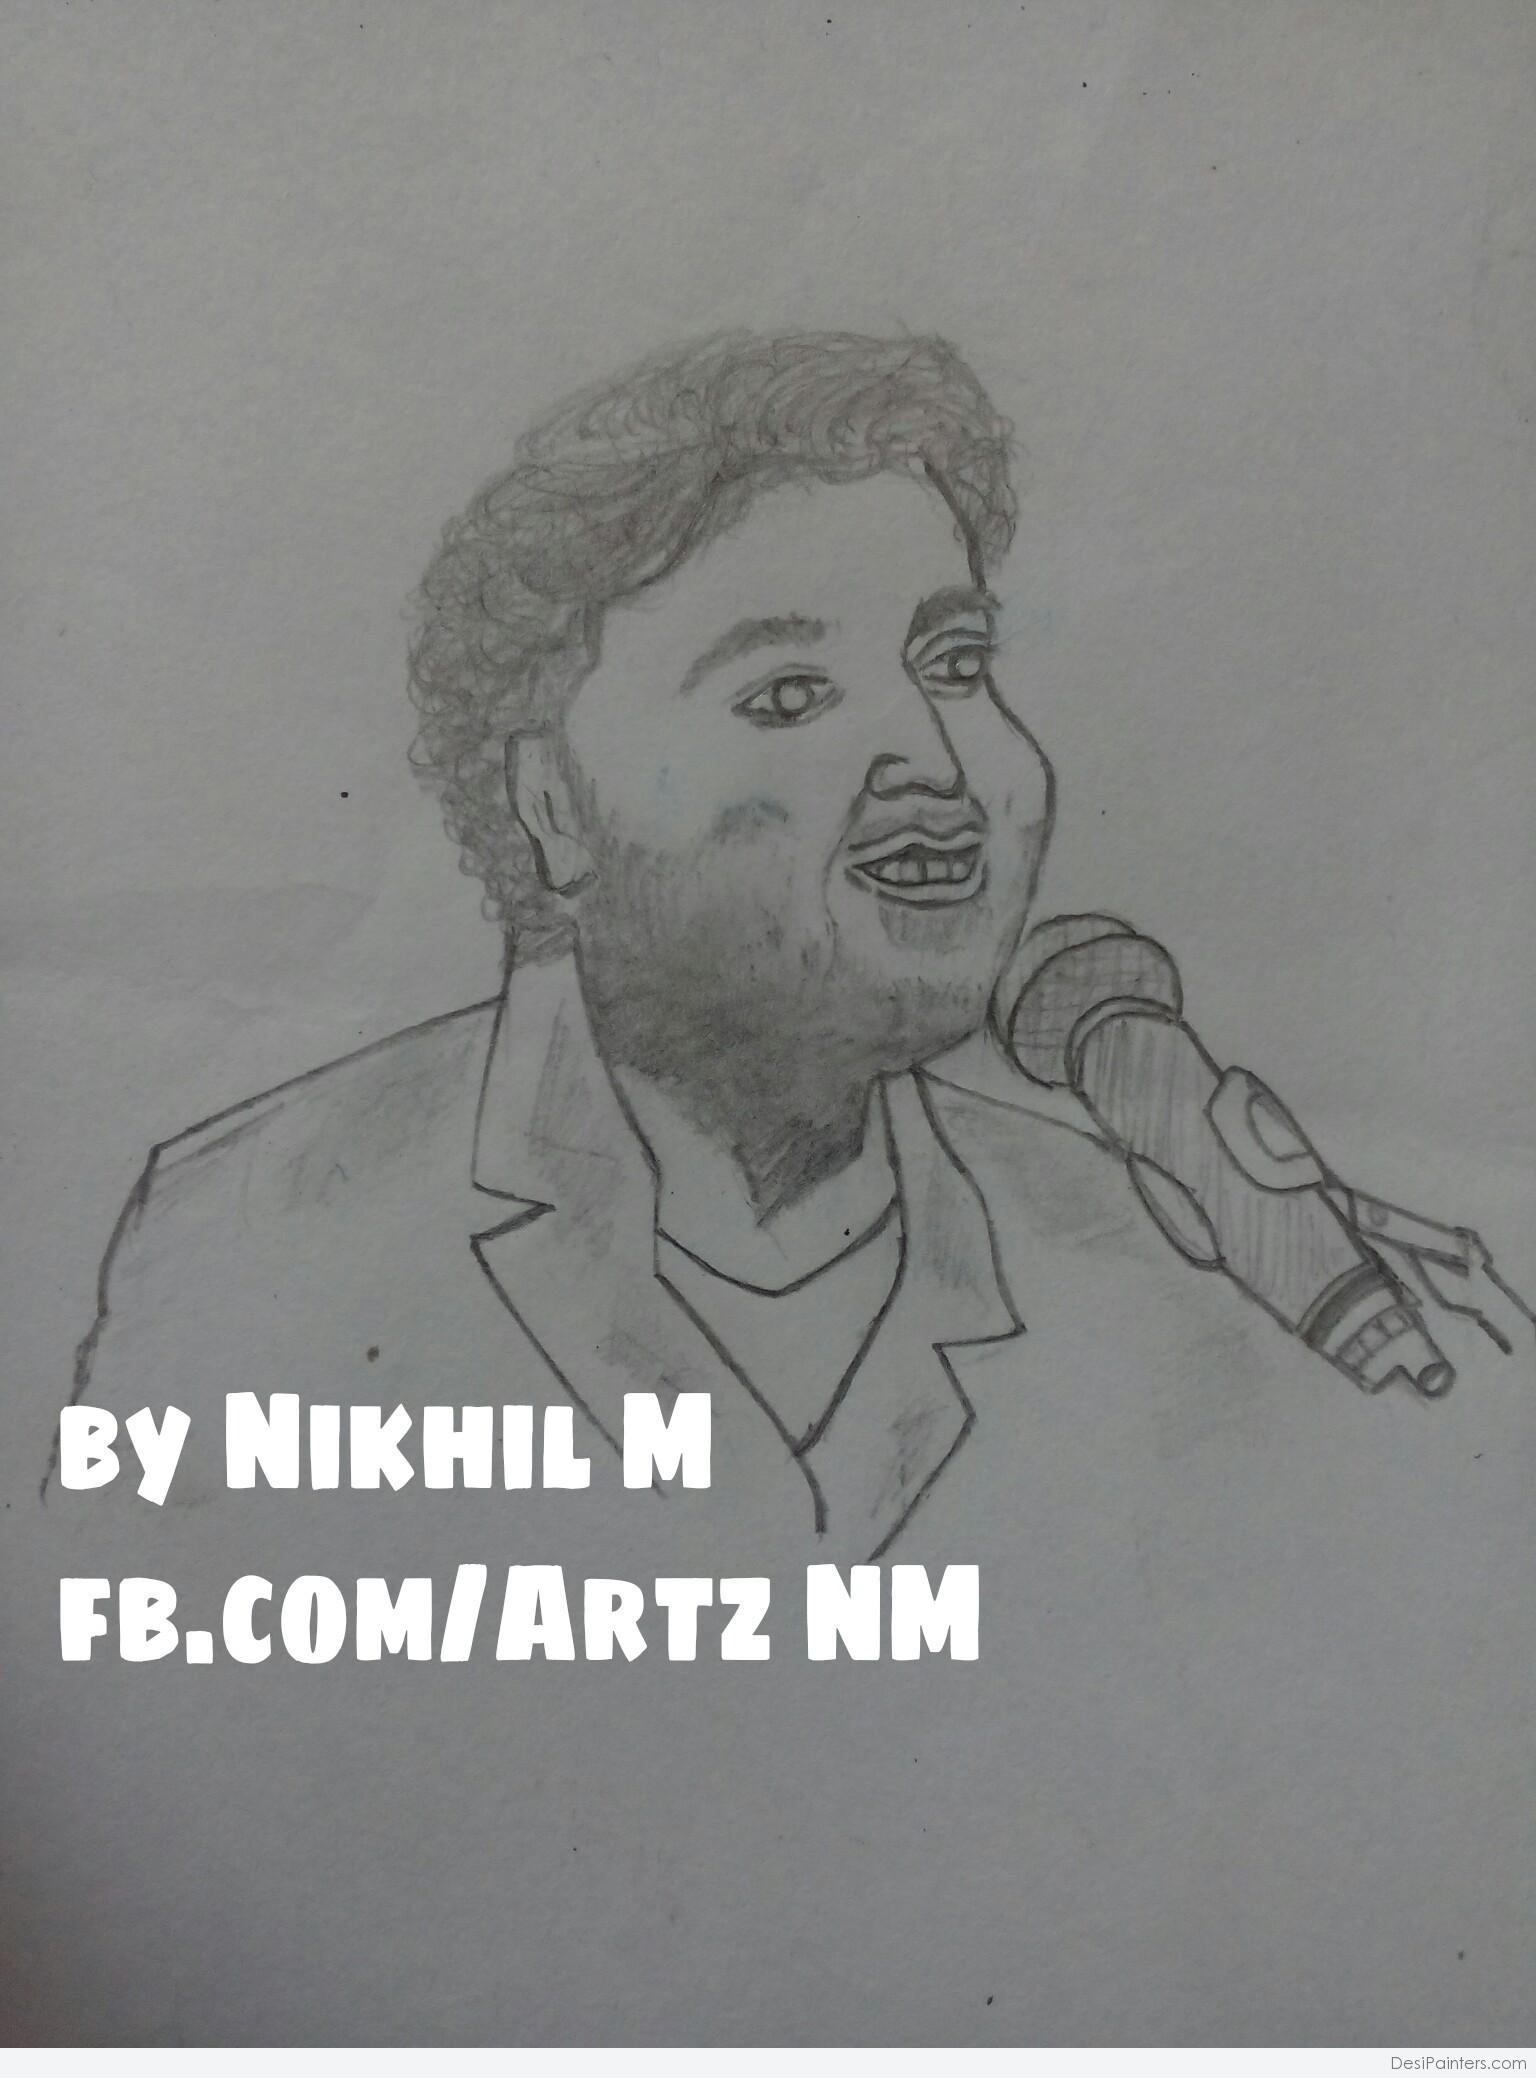 Pencil Sketch of Arijit Singh